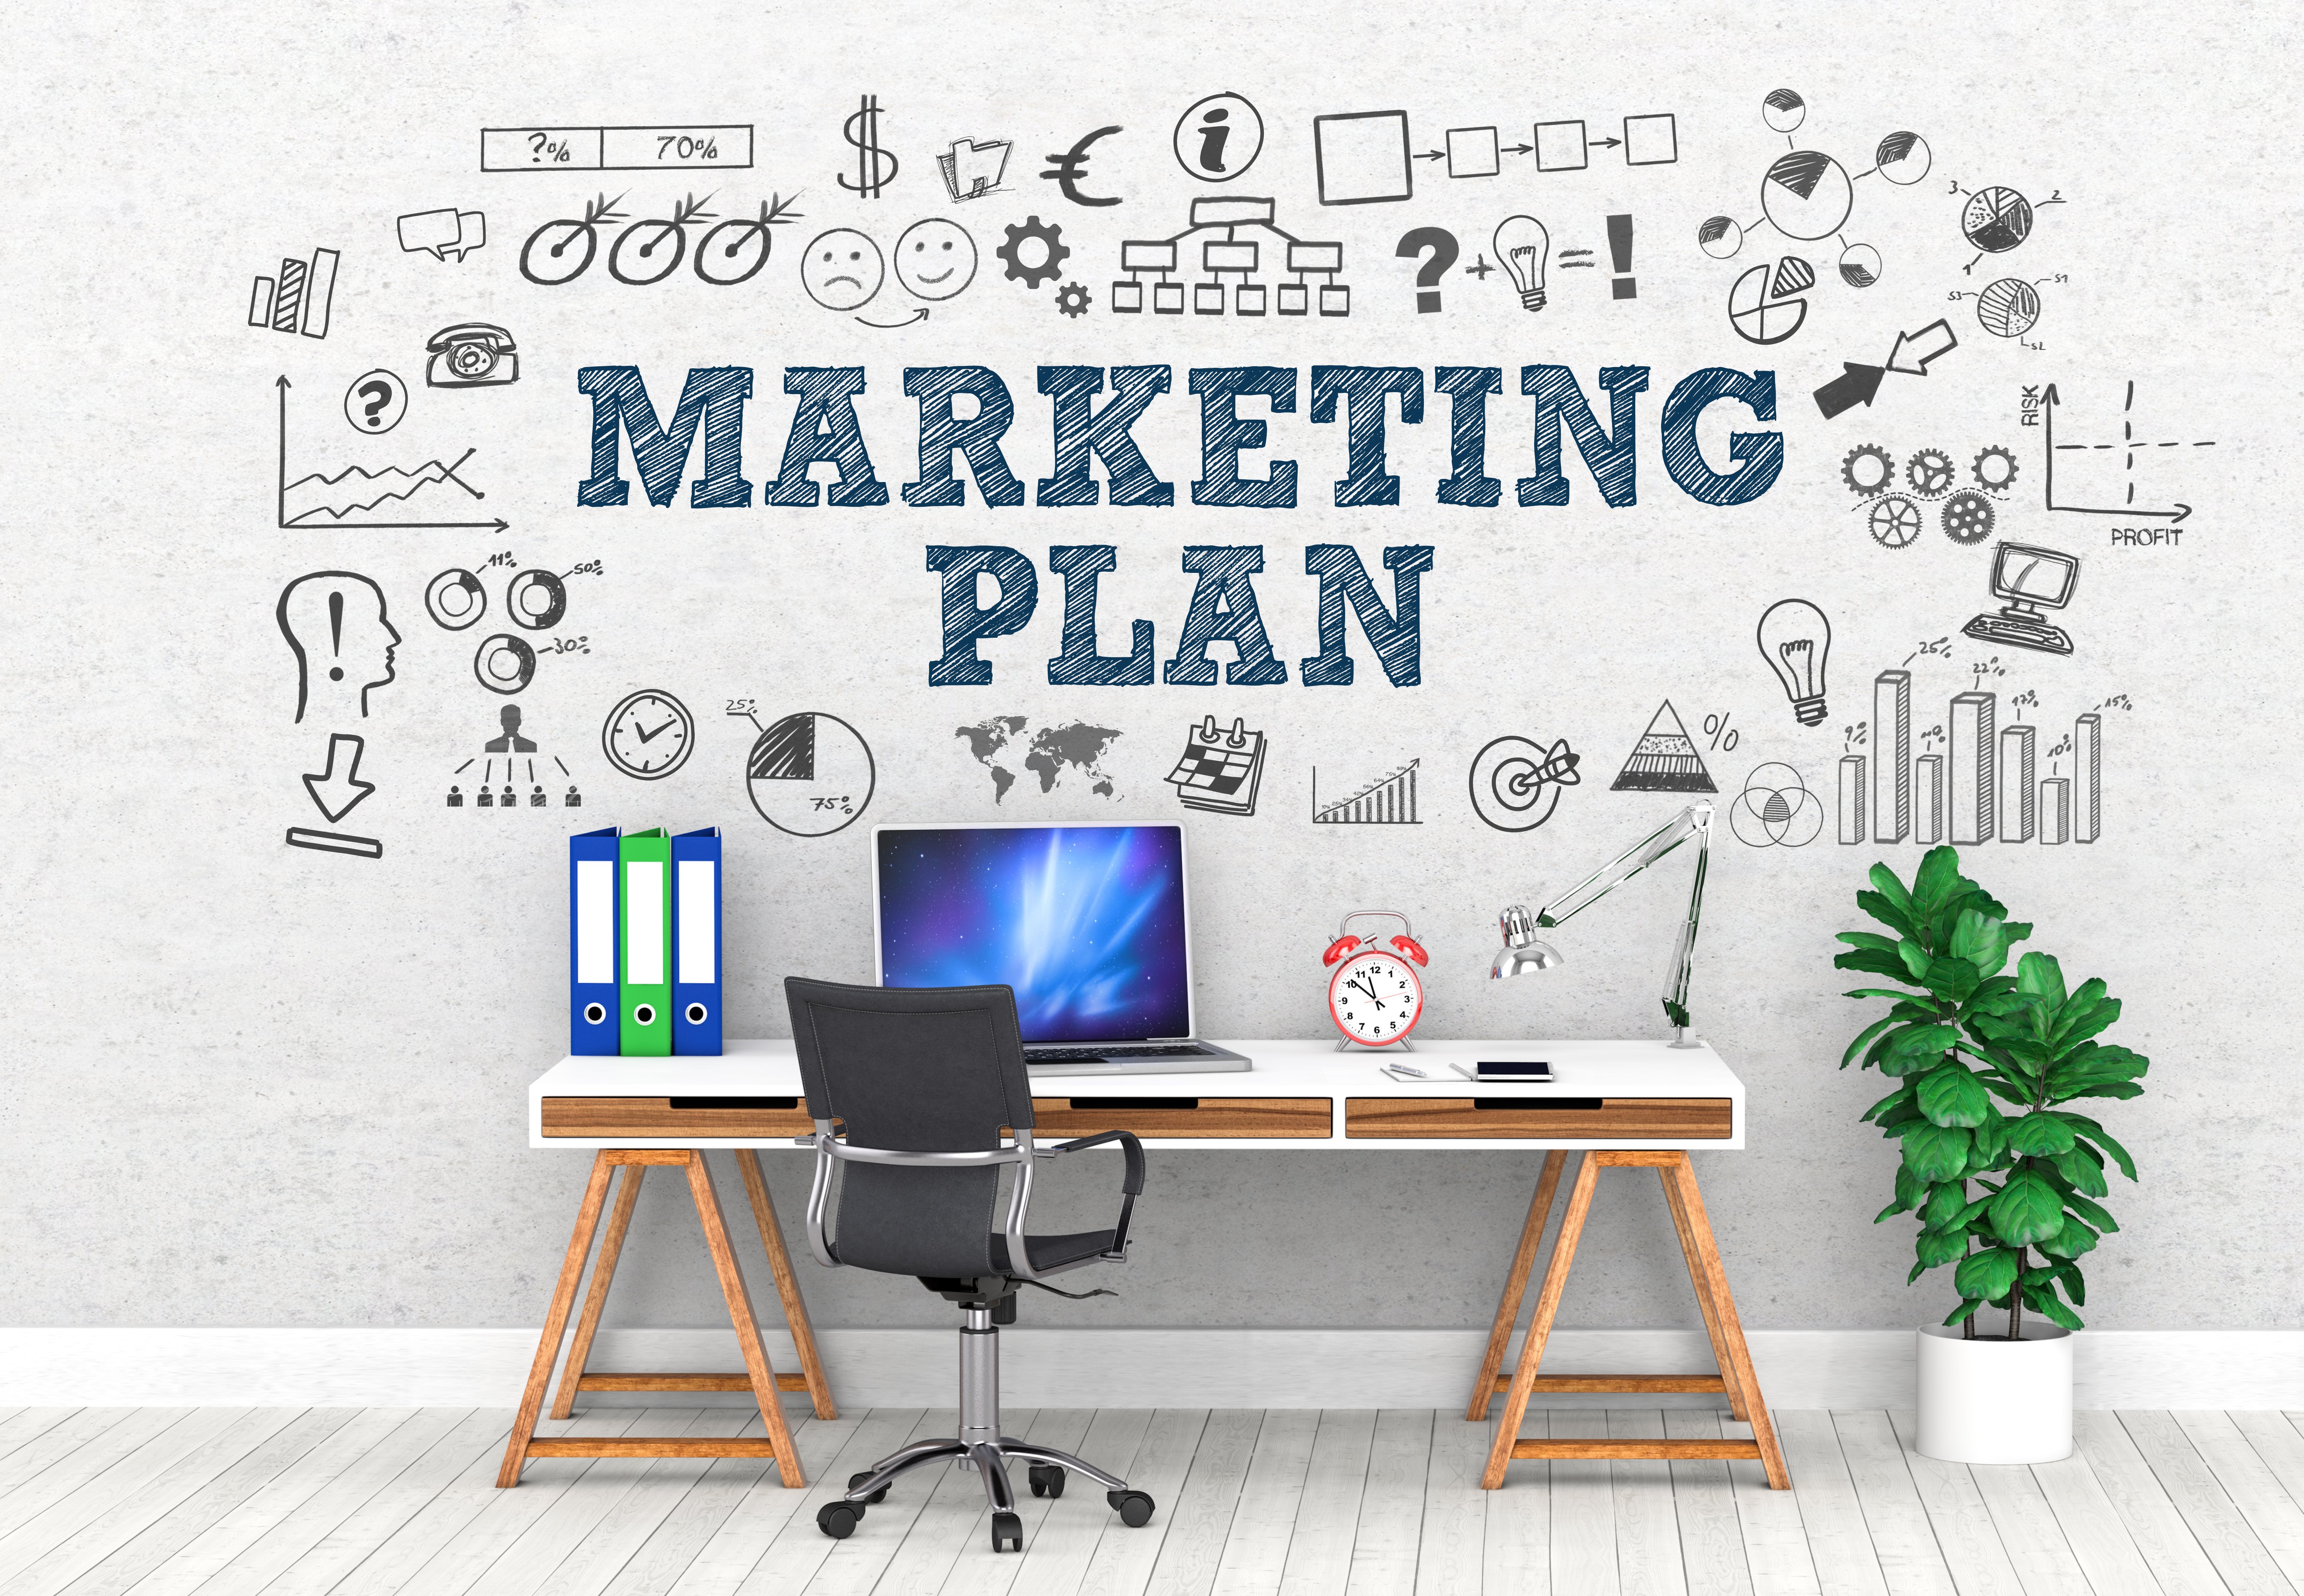 Marketing Plan 